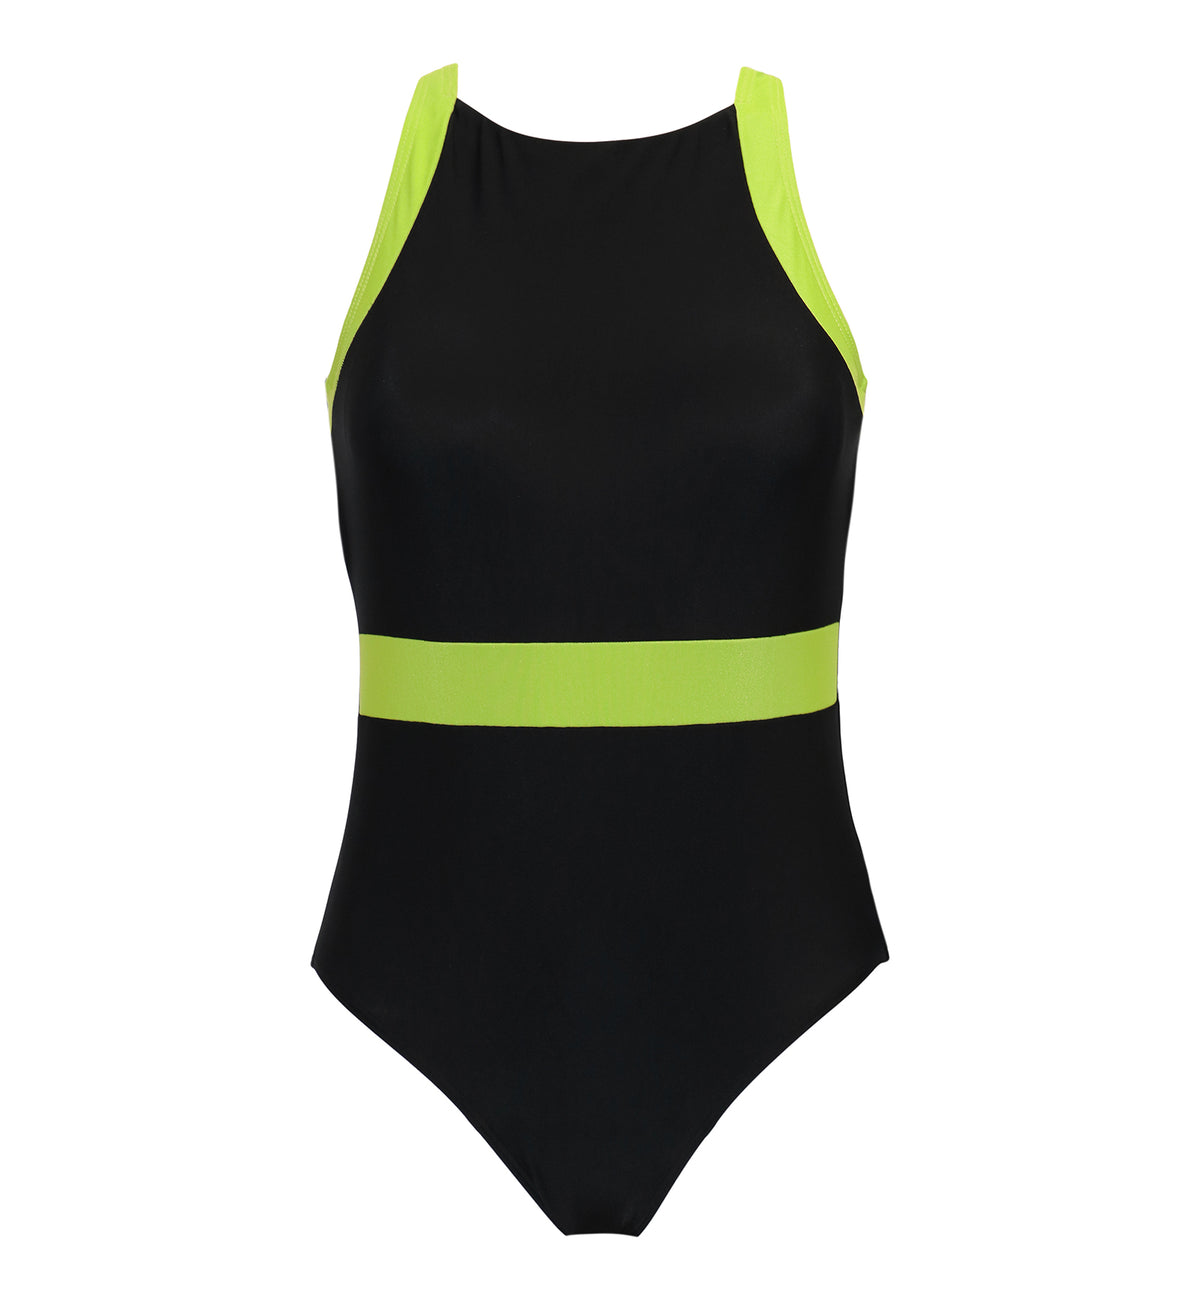 Pour Moi Energy Chlorine Resistant High Leg Swimsuit (1440),Small,Black/Lime - Black/Lime,Small